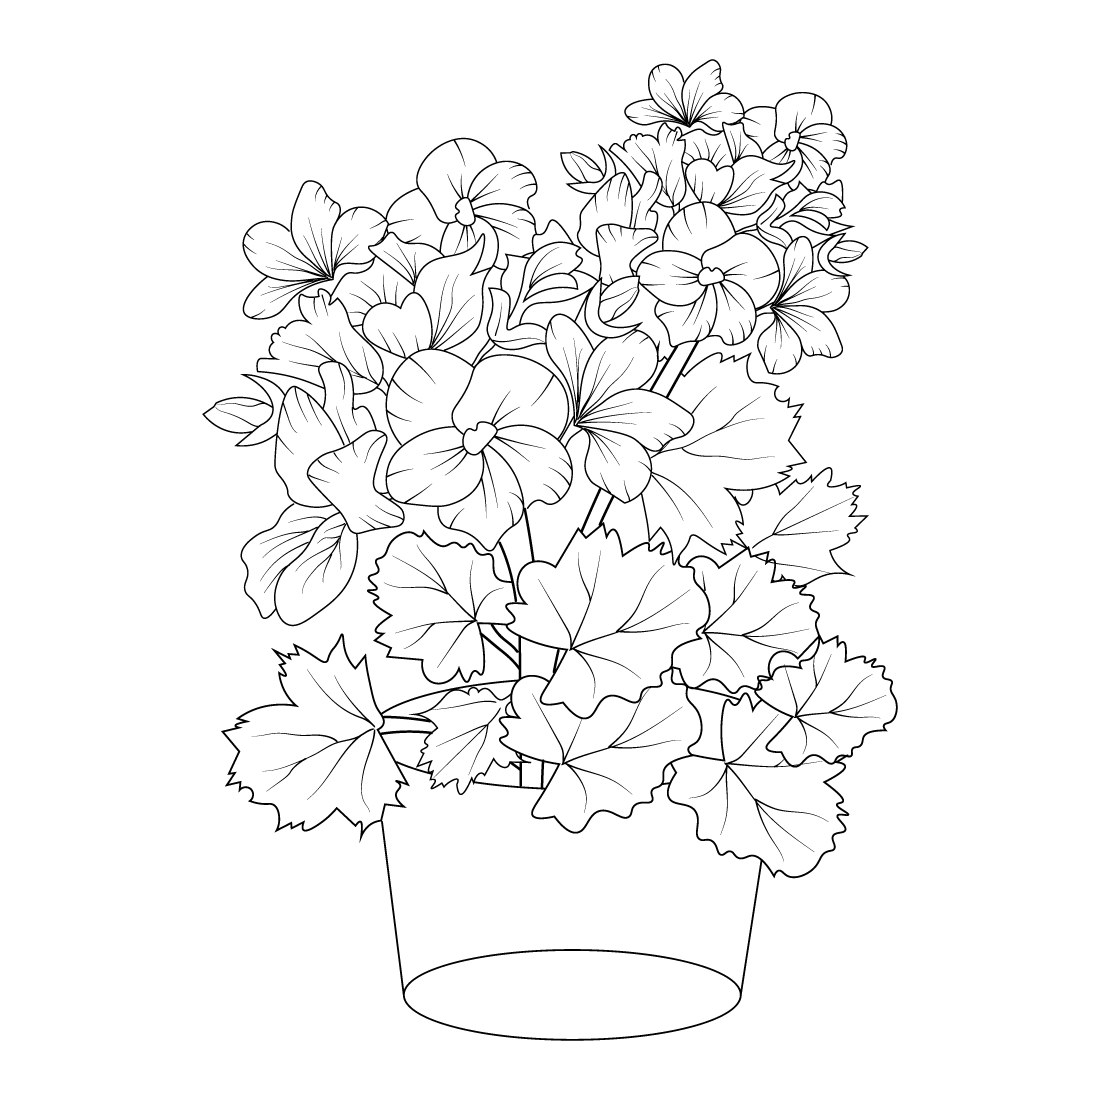 vintage geranium botanical illustration, easy geranium flower drawing, outline geranium drawing, geranium flower pencil art, botanical illustratioin, flower coloring page for adults preview image.